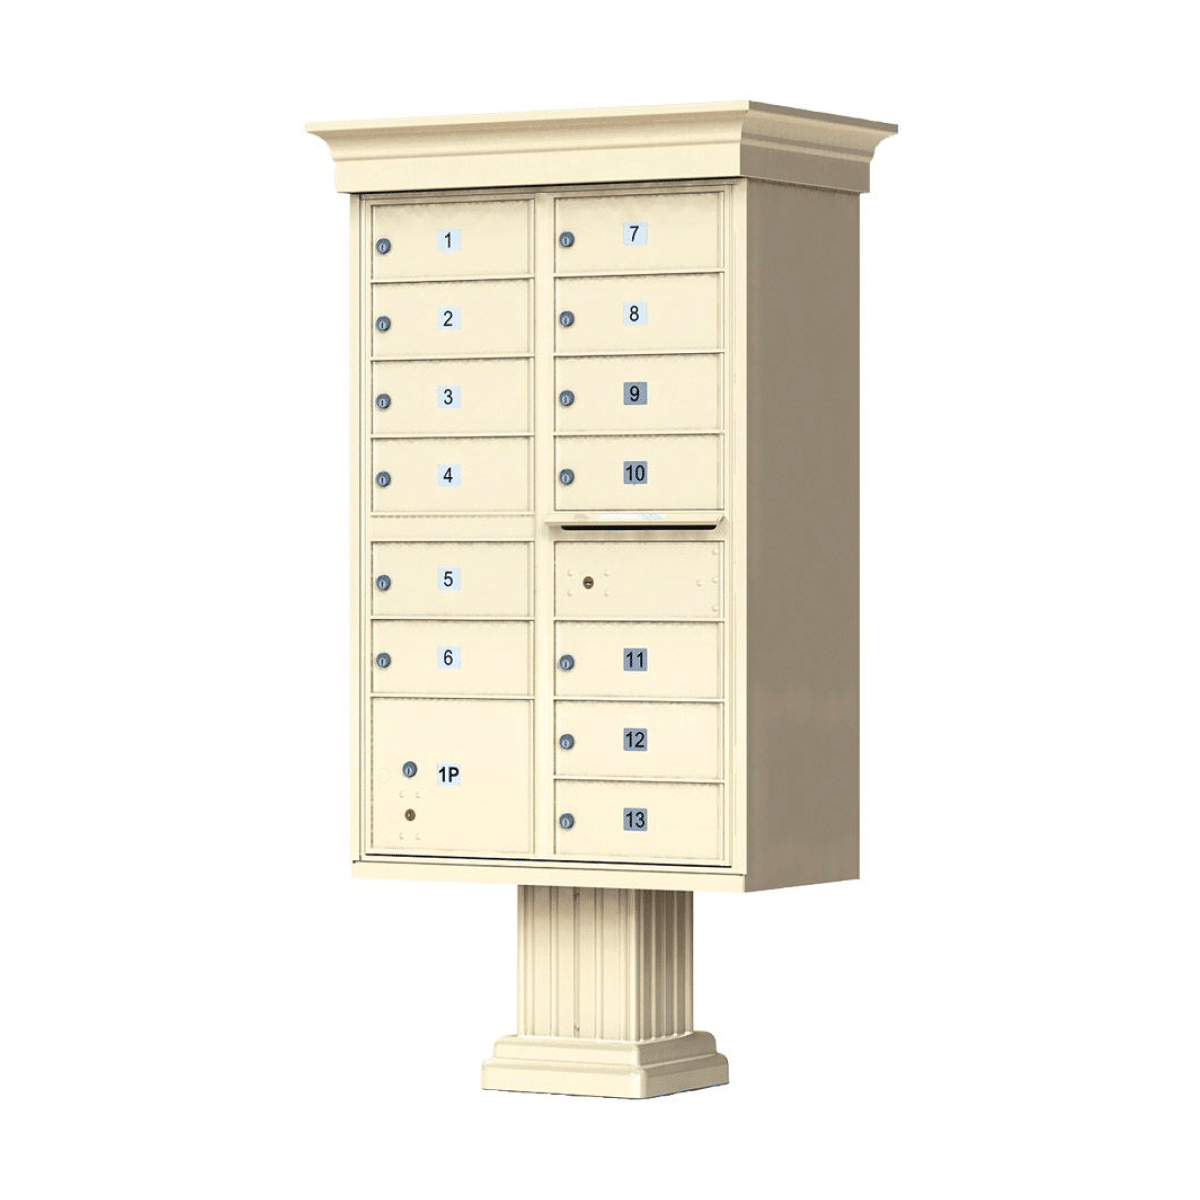 Florence CBU Cluster Mailbox – Vogue Classic Kit, 13 Tenant Doors, 1 Parcel Locker Product Image